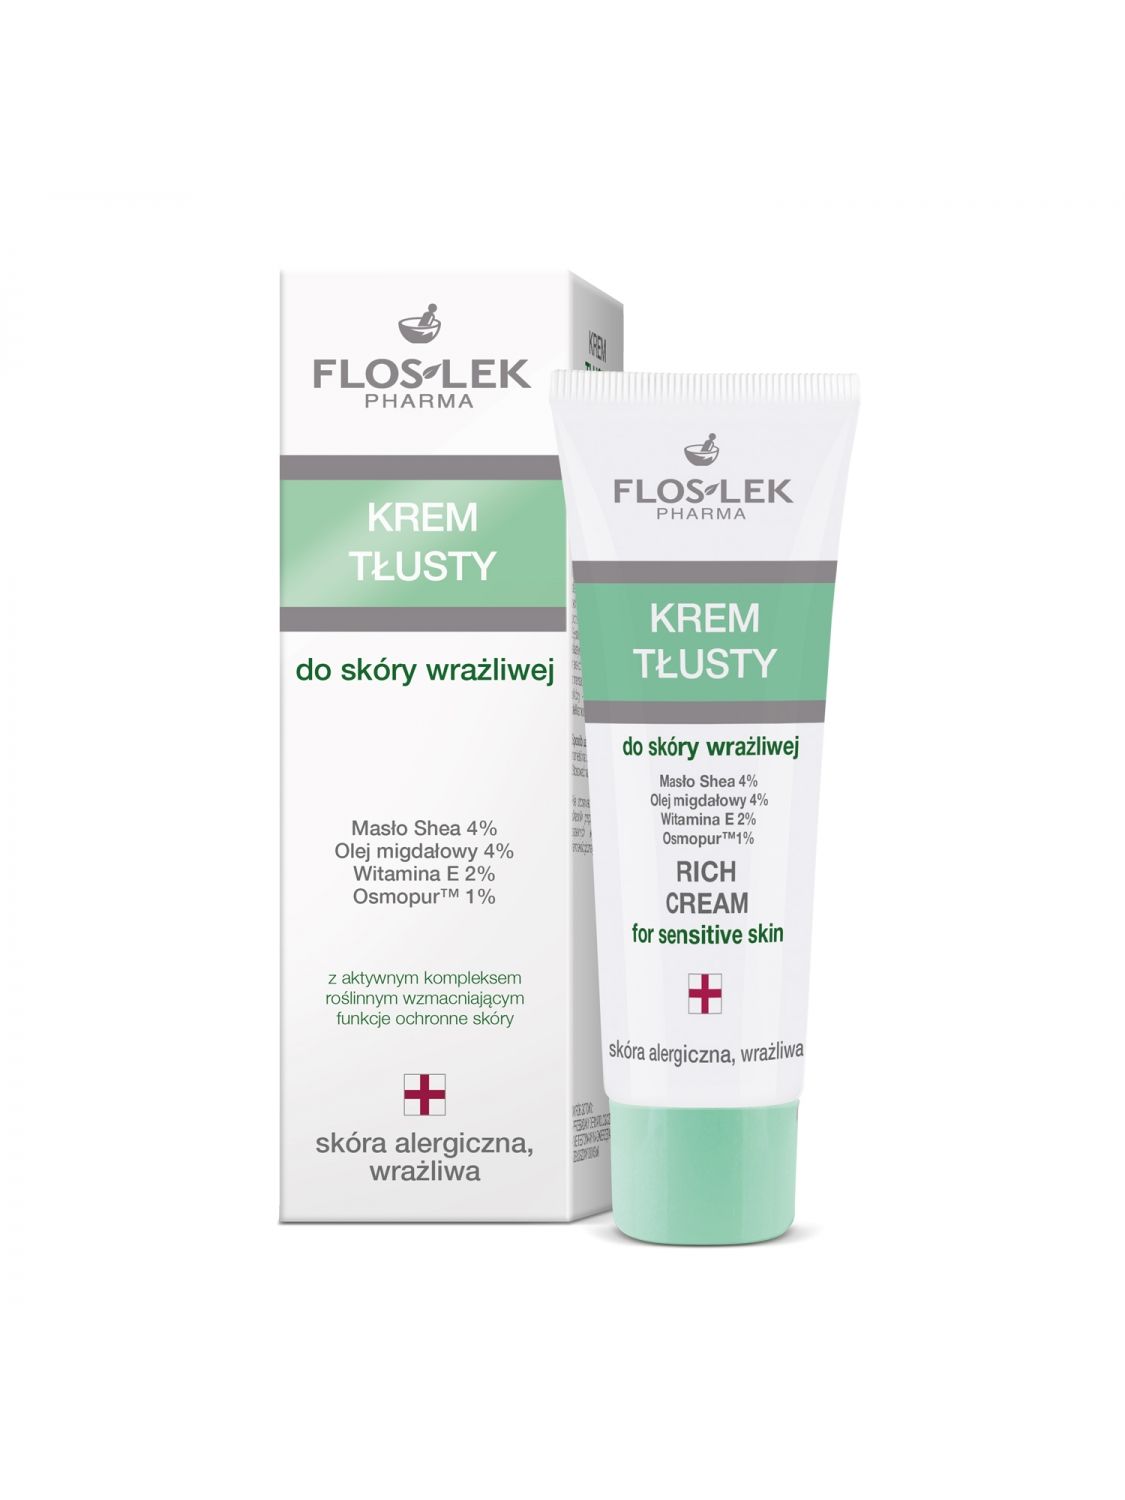 Rich cream for sensitive skin - 50 ml - Floslek